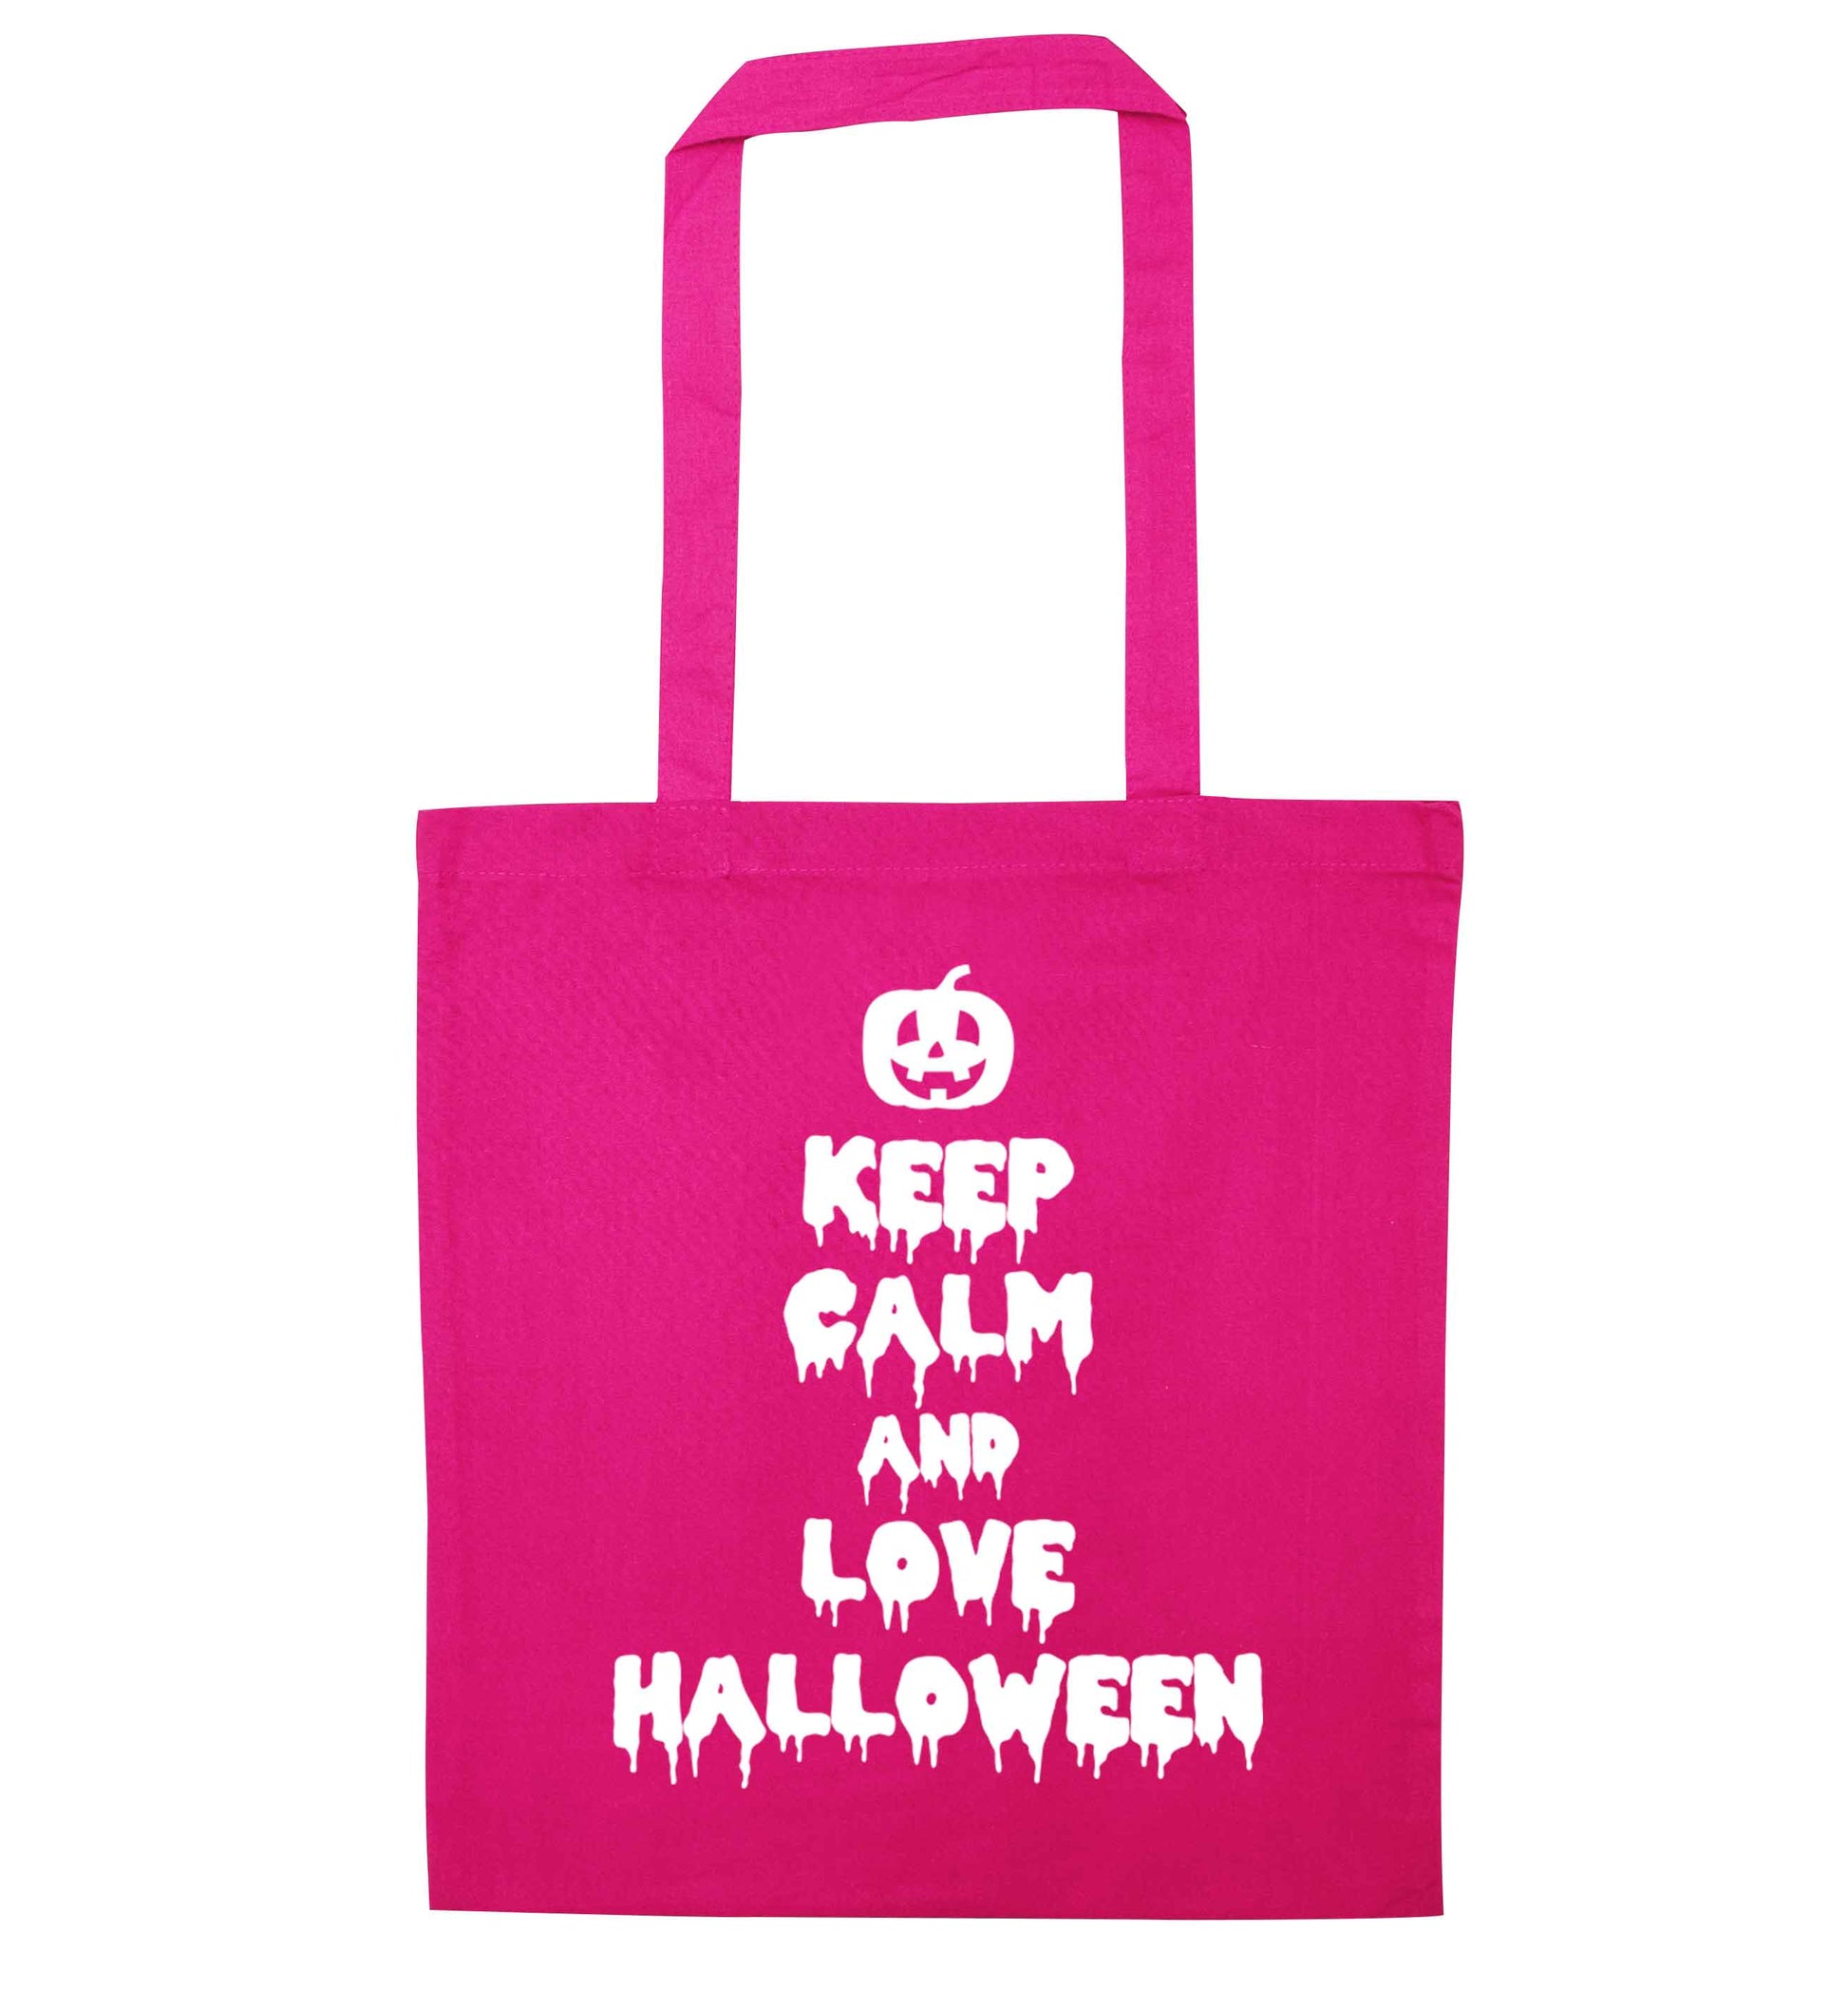 Keep calm and love halloween pink tote bag